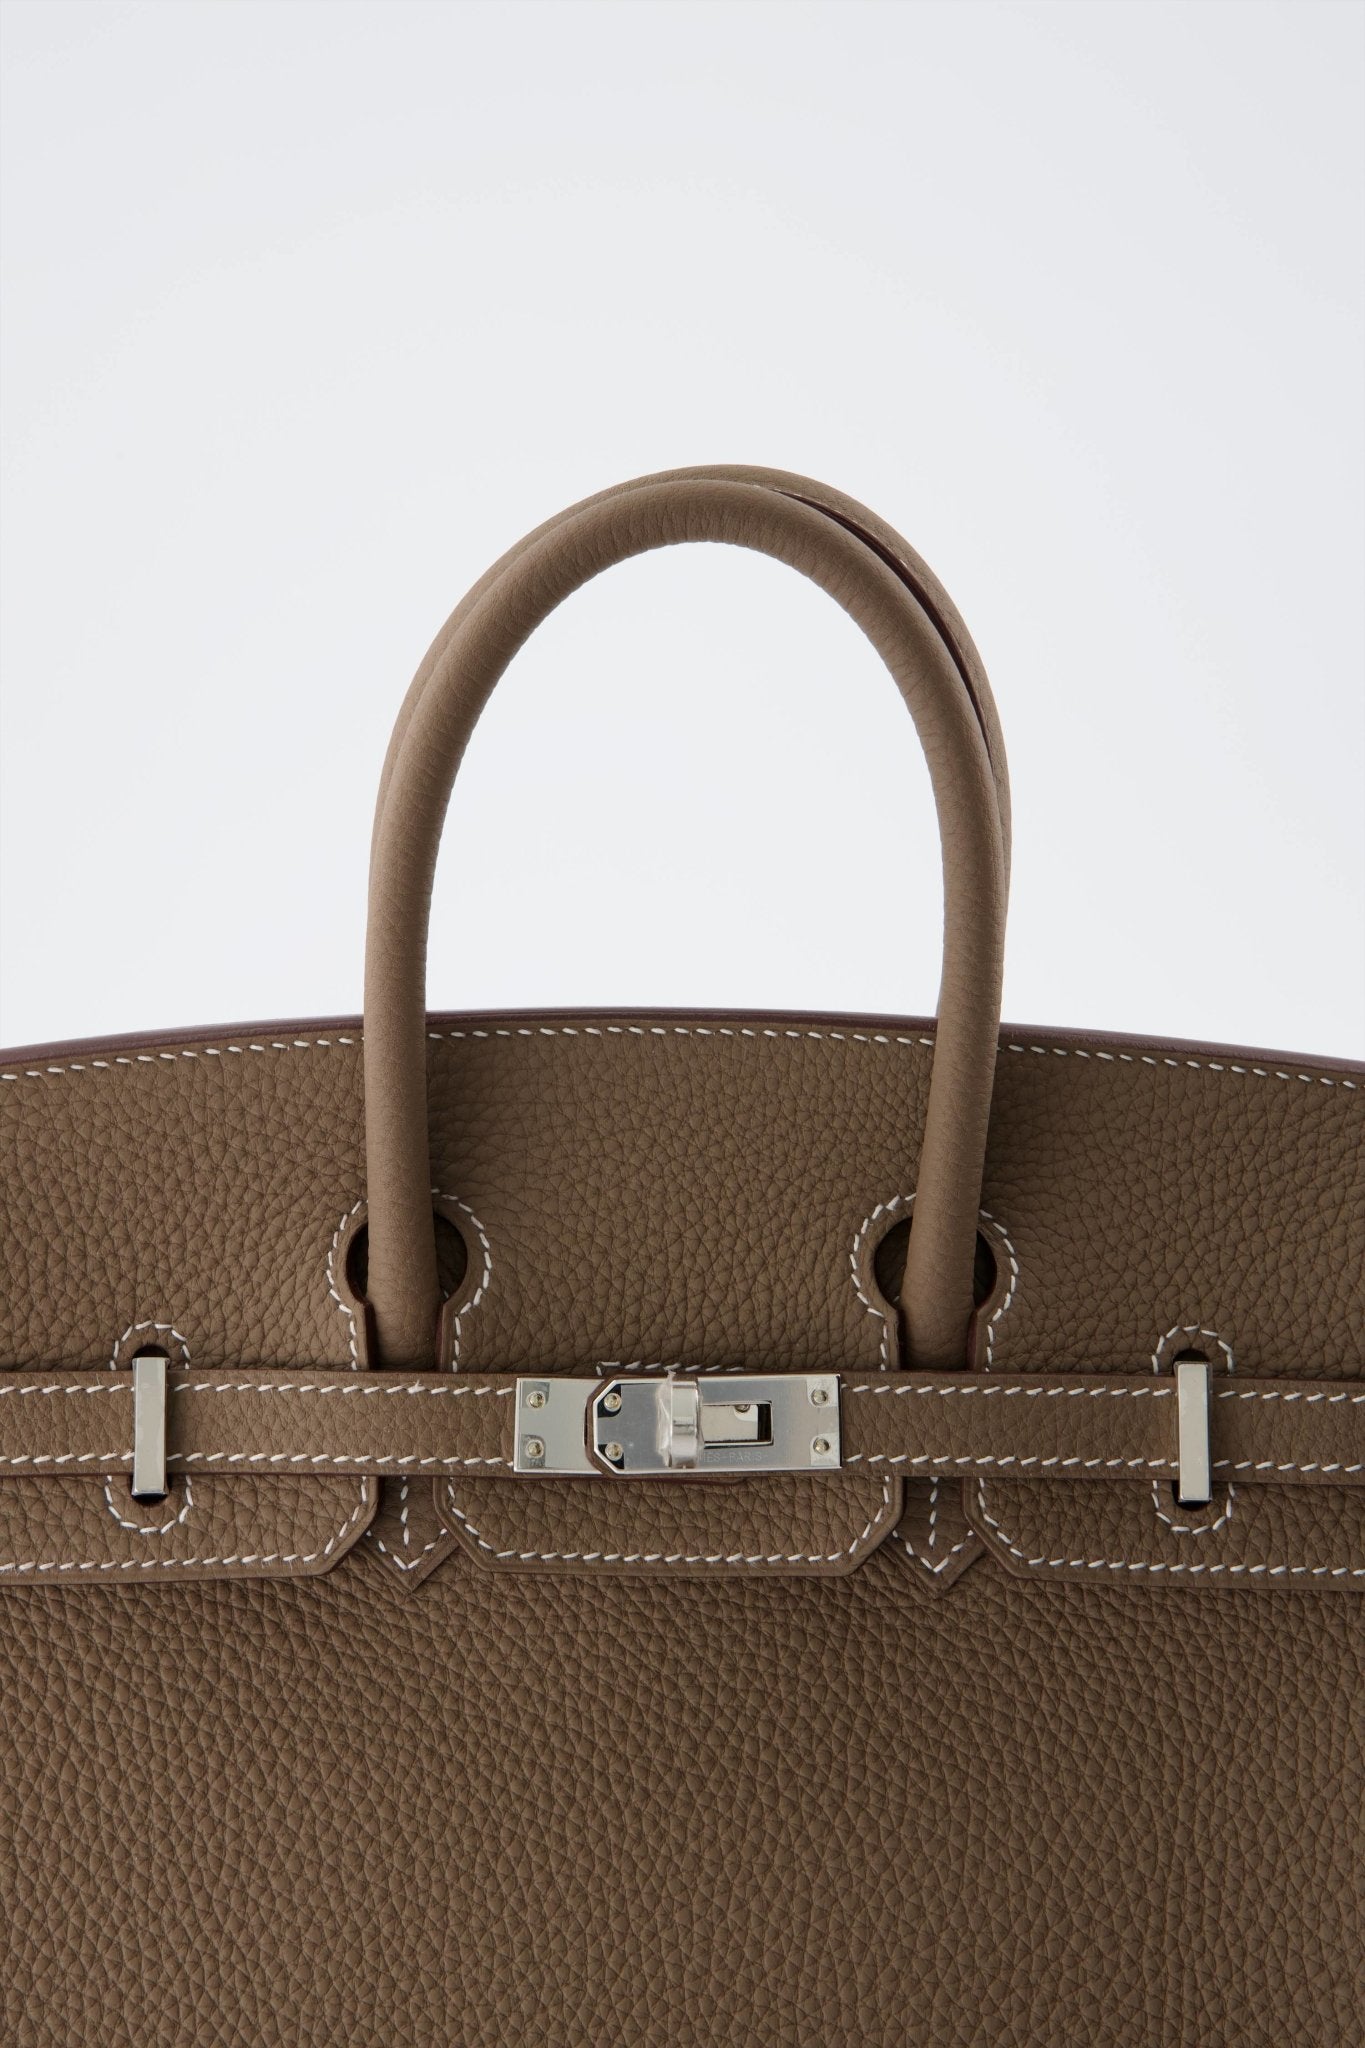 Hermès Birkin 25 In Etoupe Togo Leather With Palladium Hardware